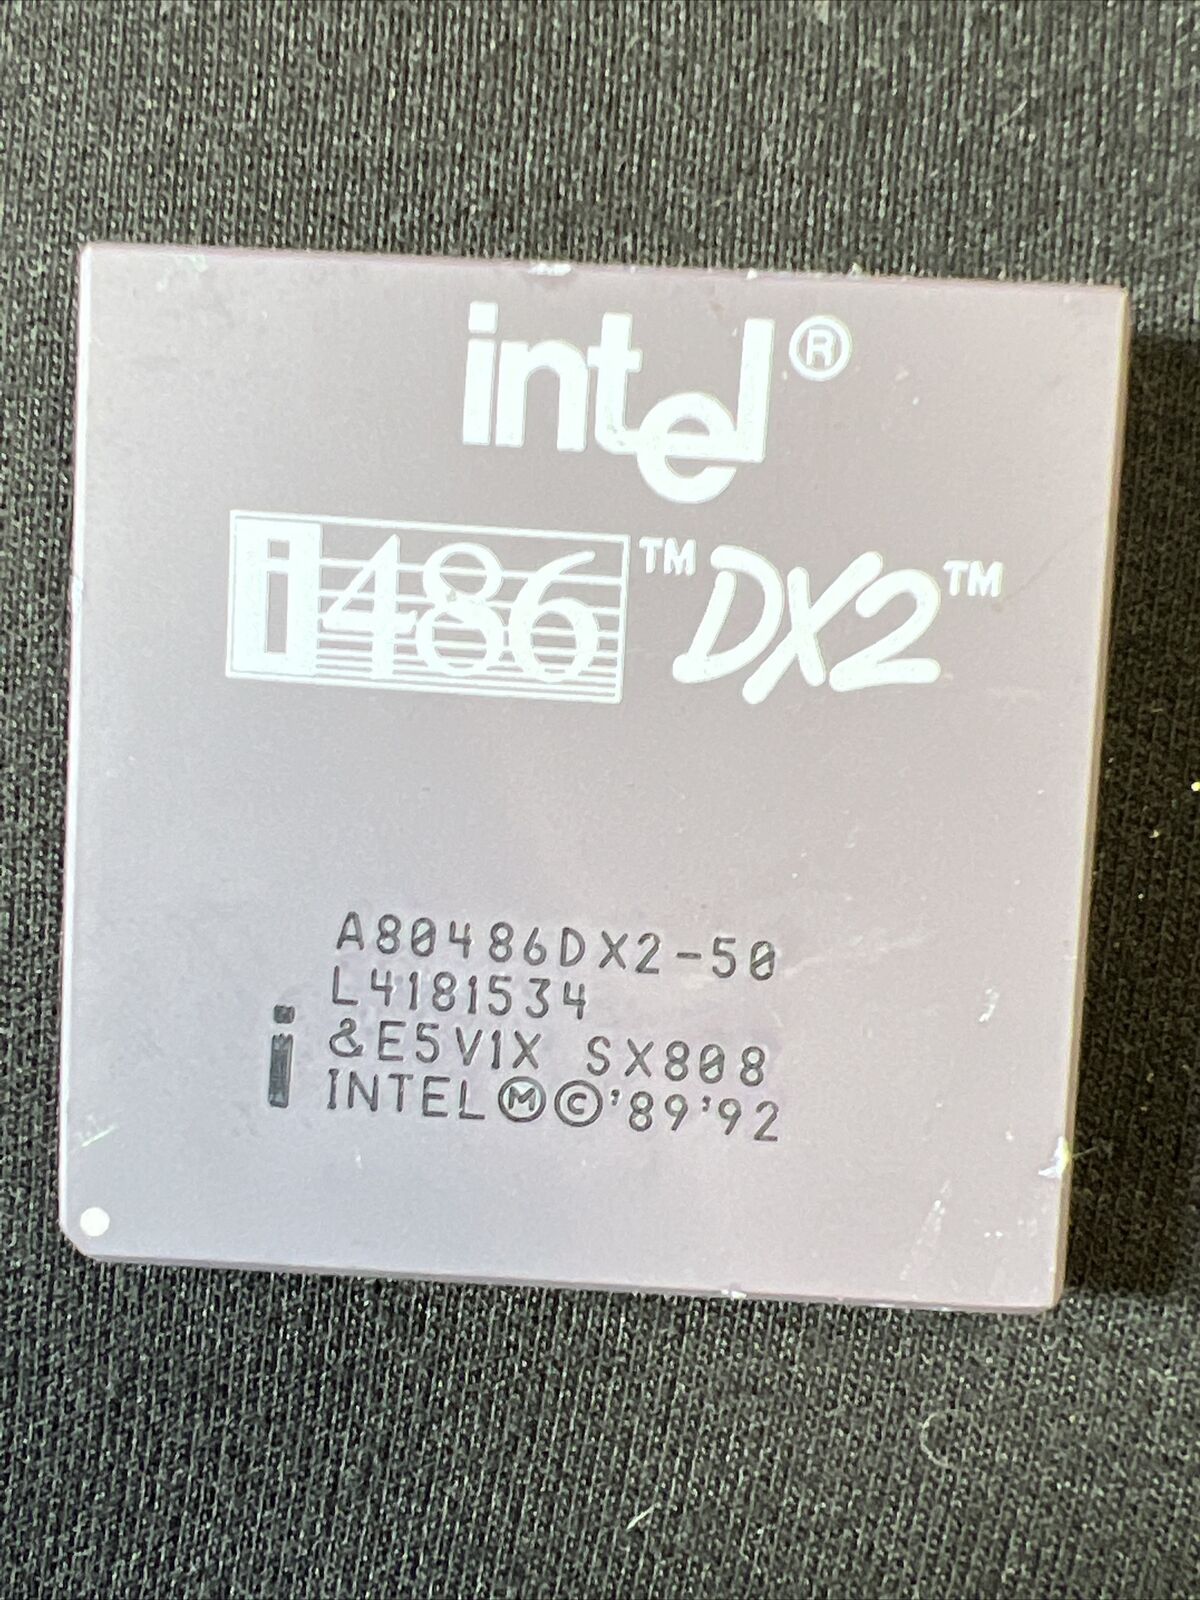 Intel i486 DX2 80486 50MHz SX626 A80486DX2-50 CPU Processor